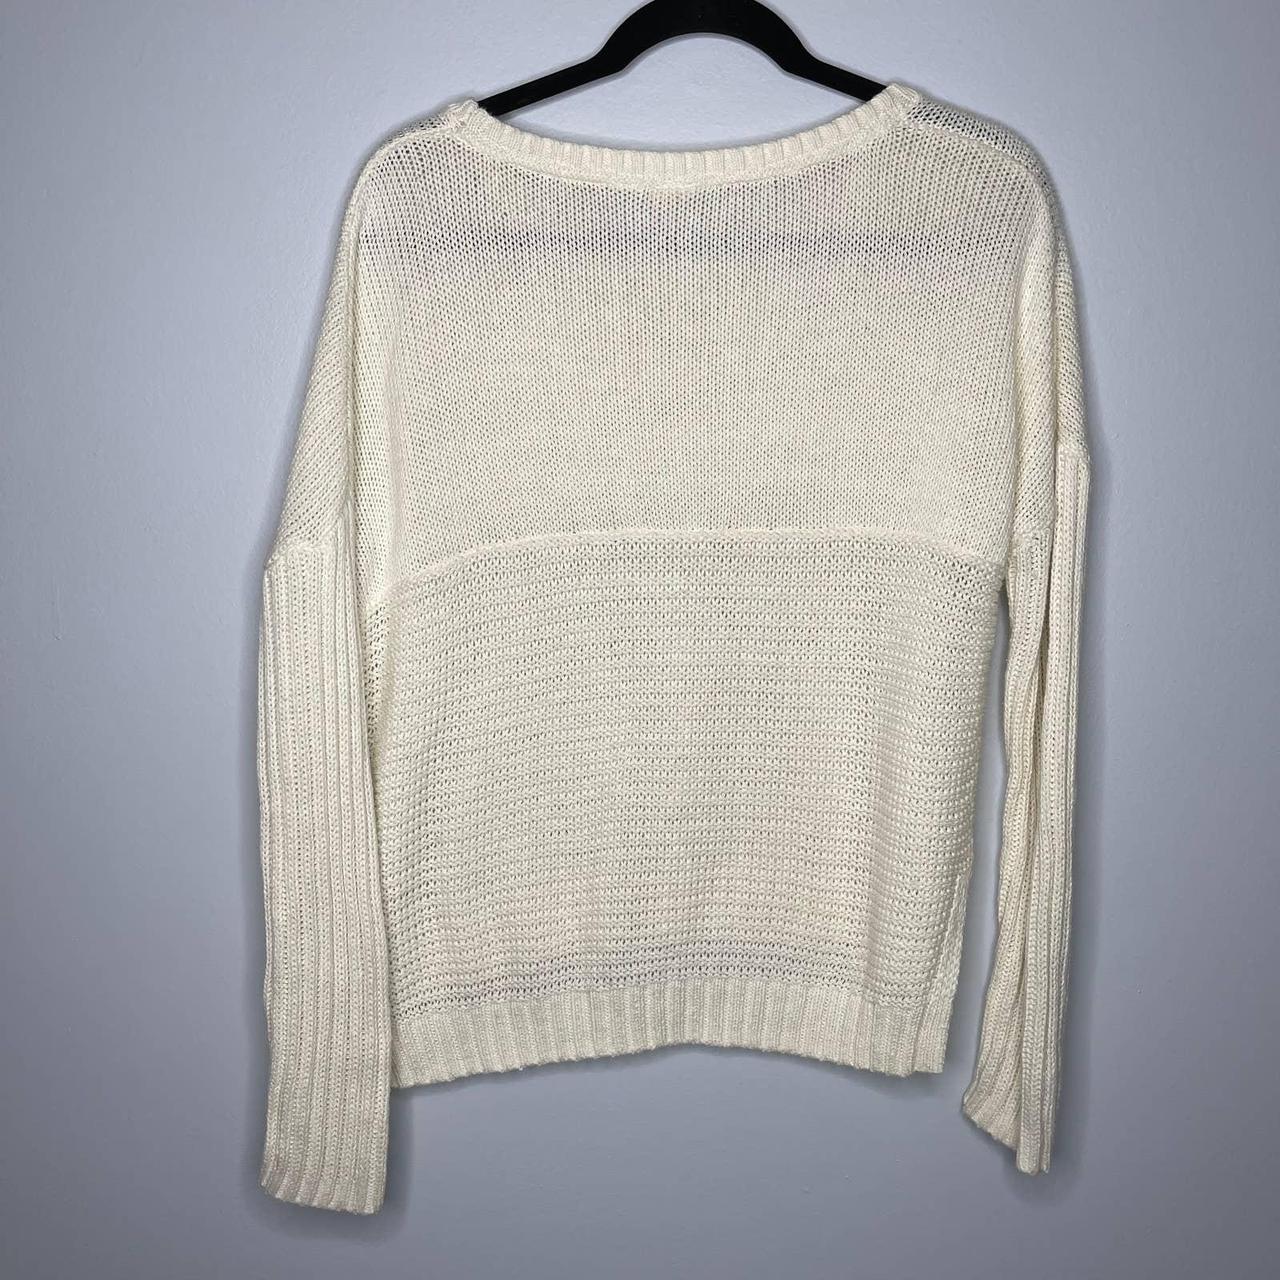 Product Image 4 - Roxy cream crewneck sweater size